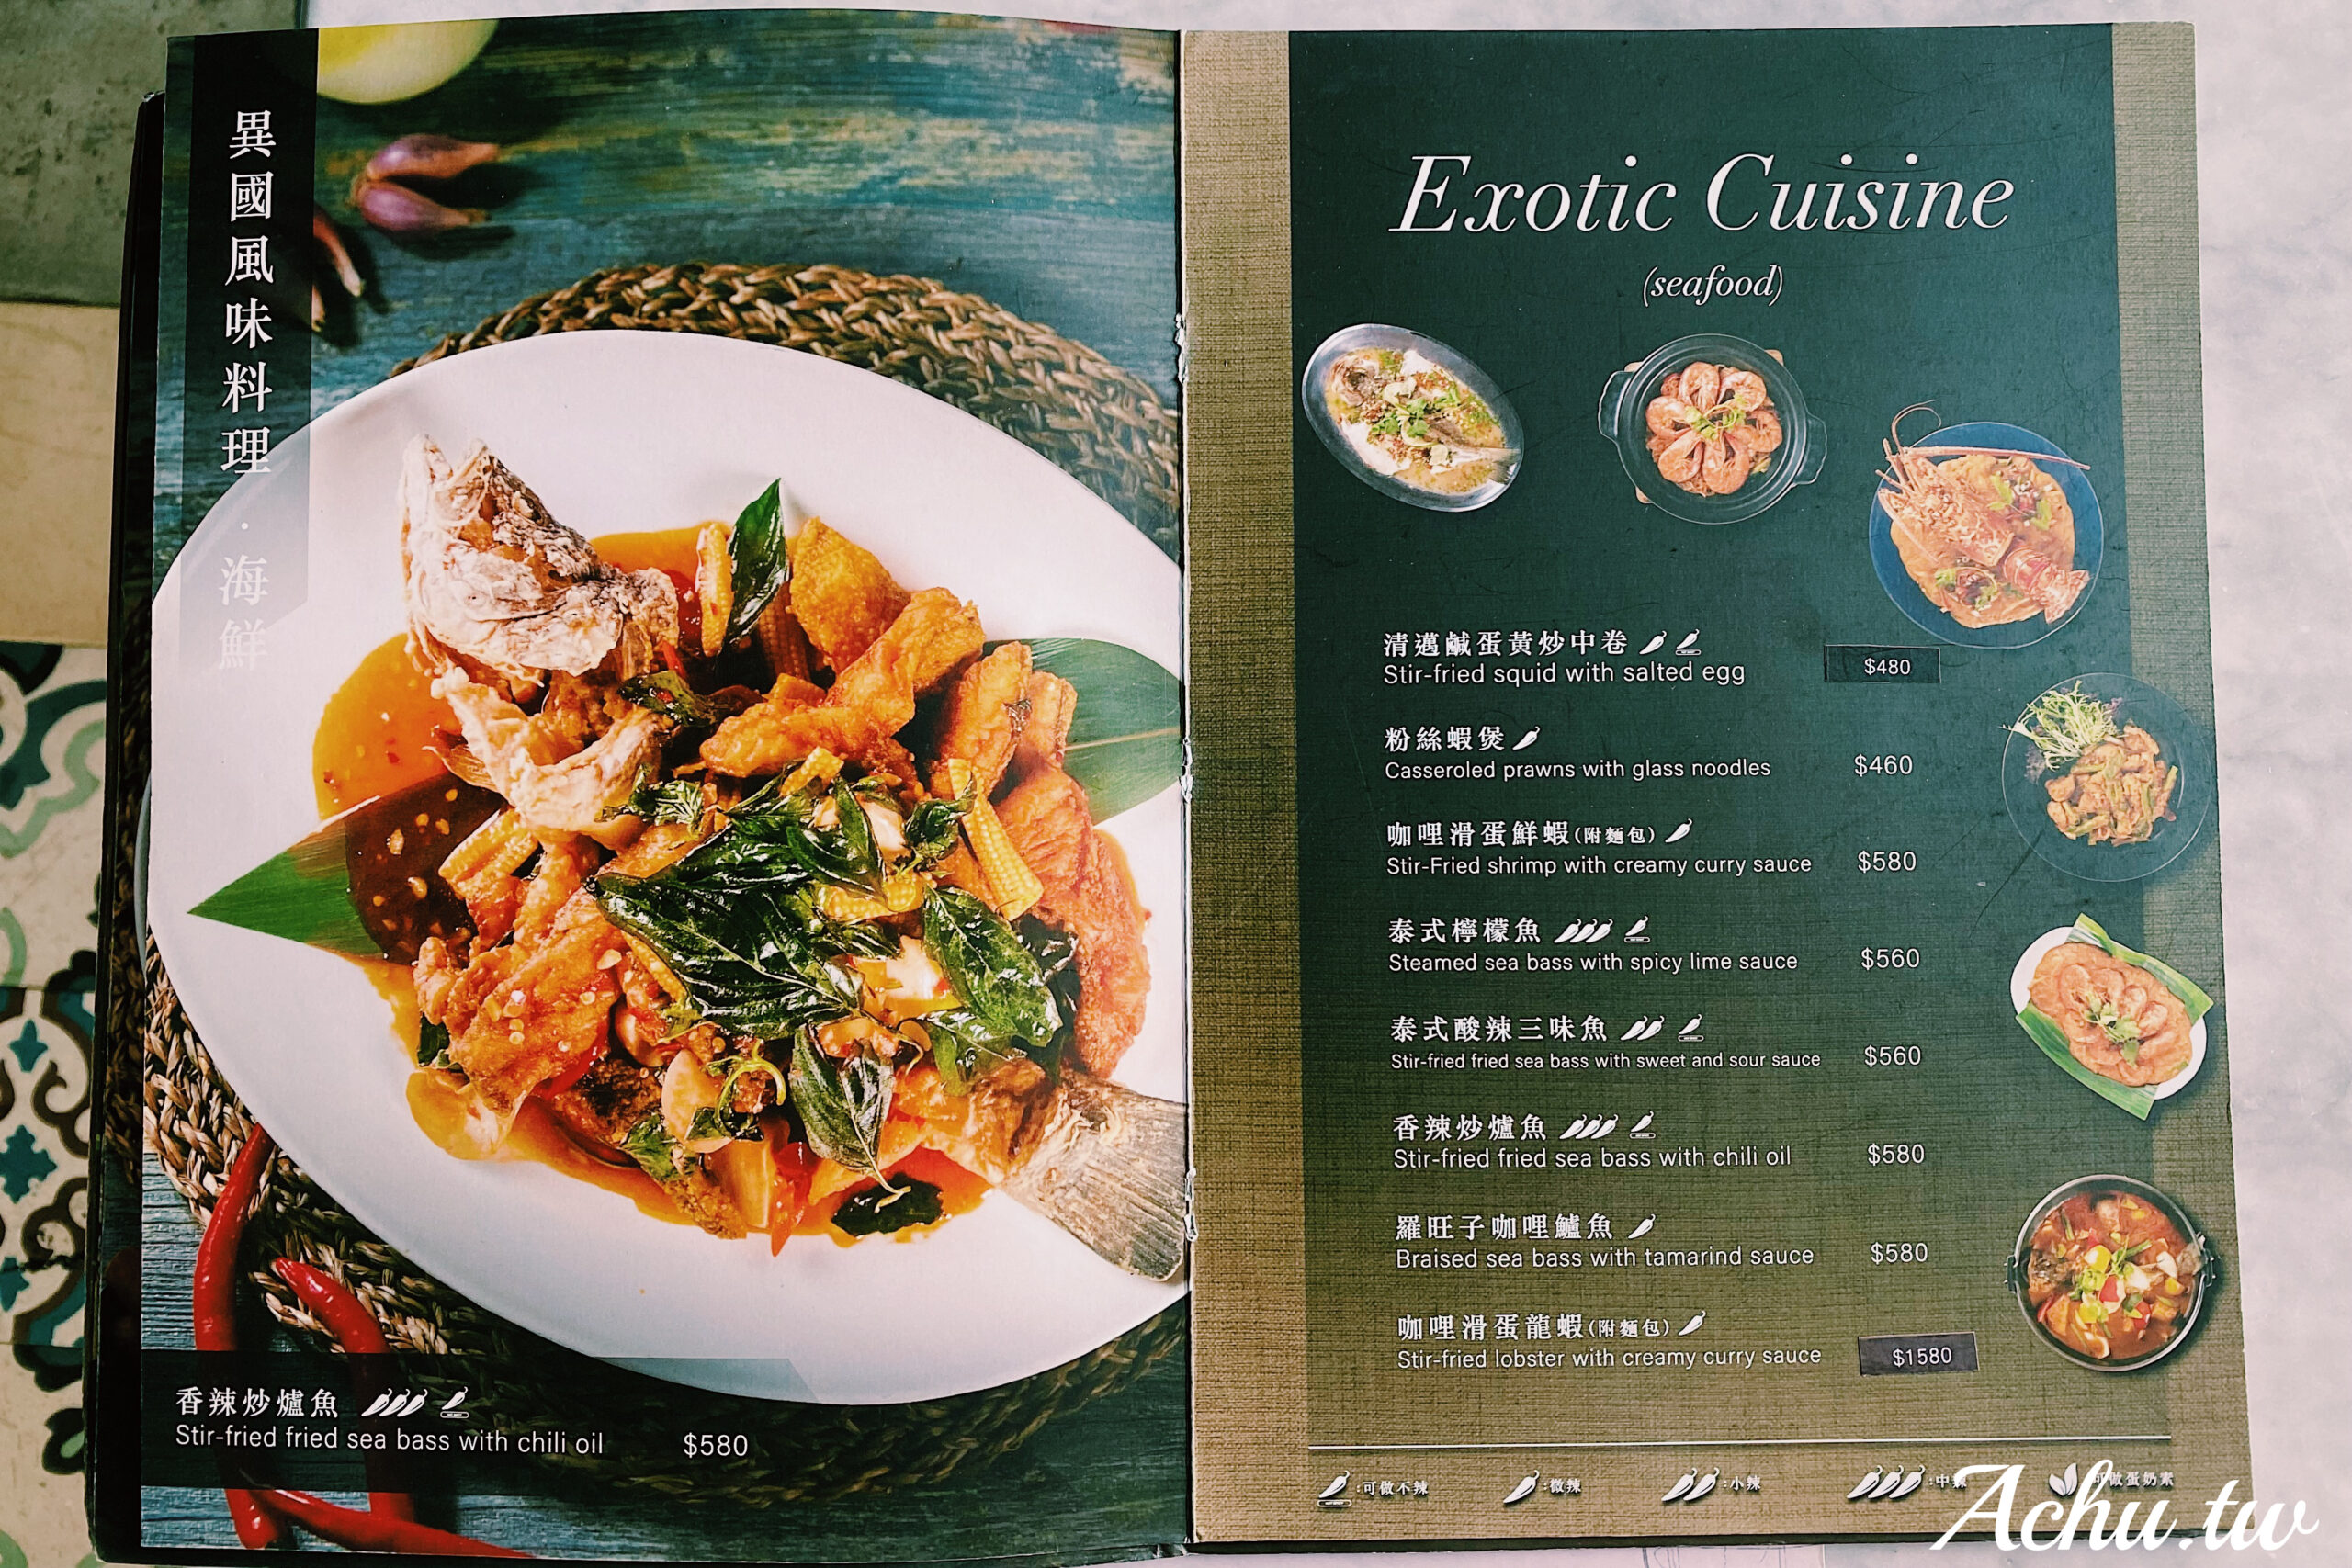 Thai J 泰式料理菜單